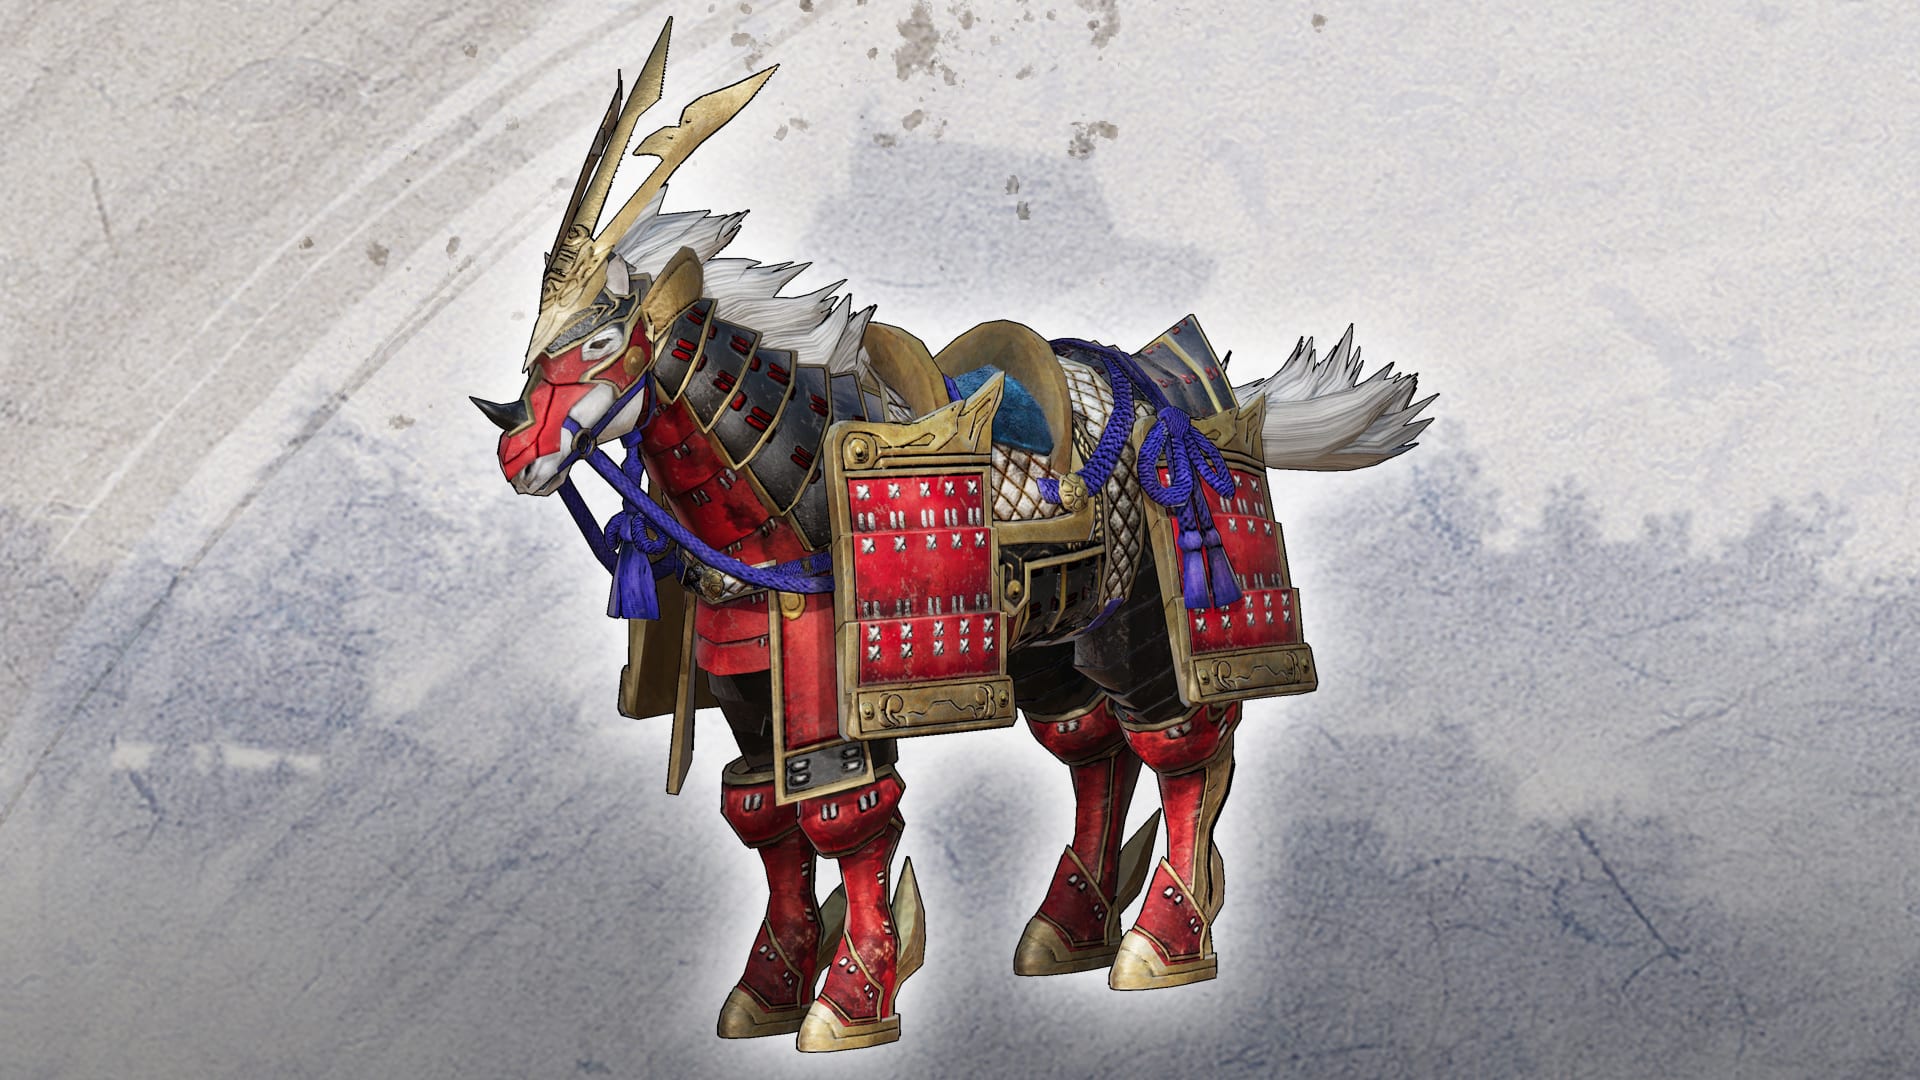 Additional Horse "Armor Coat"